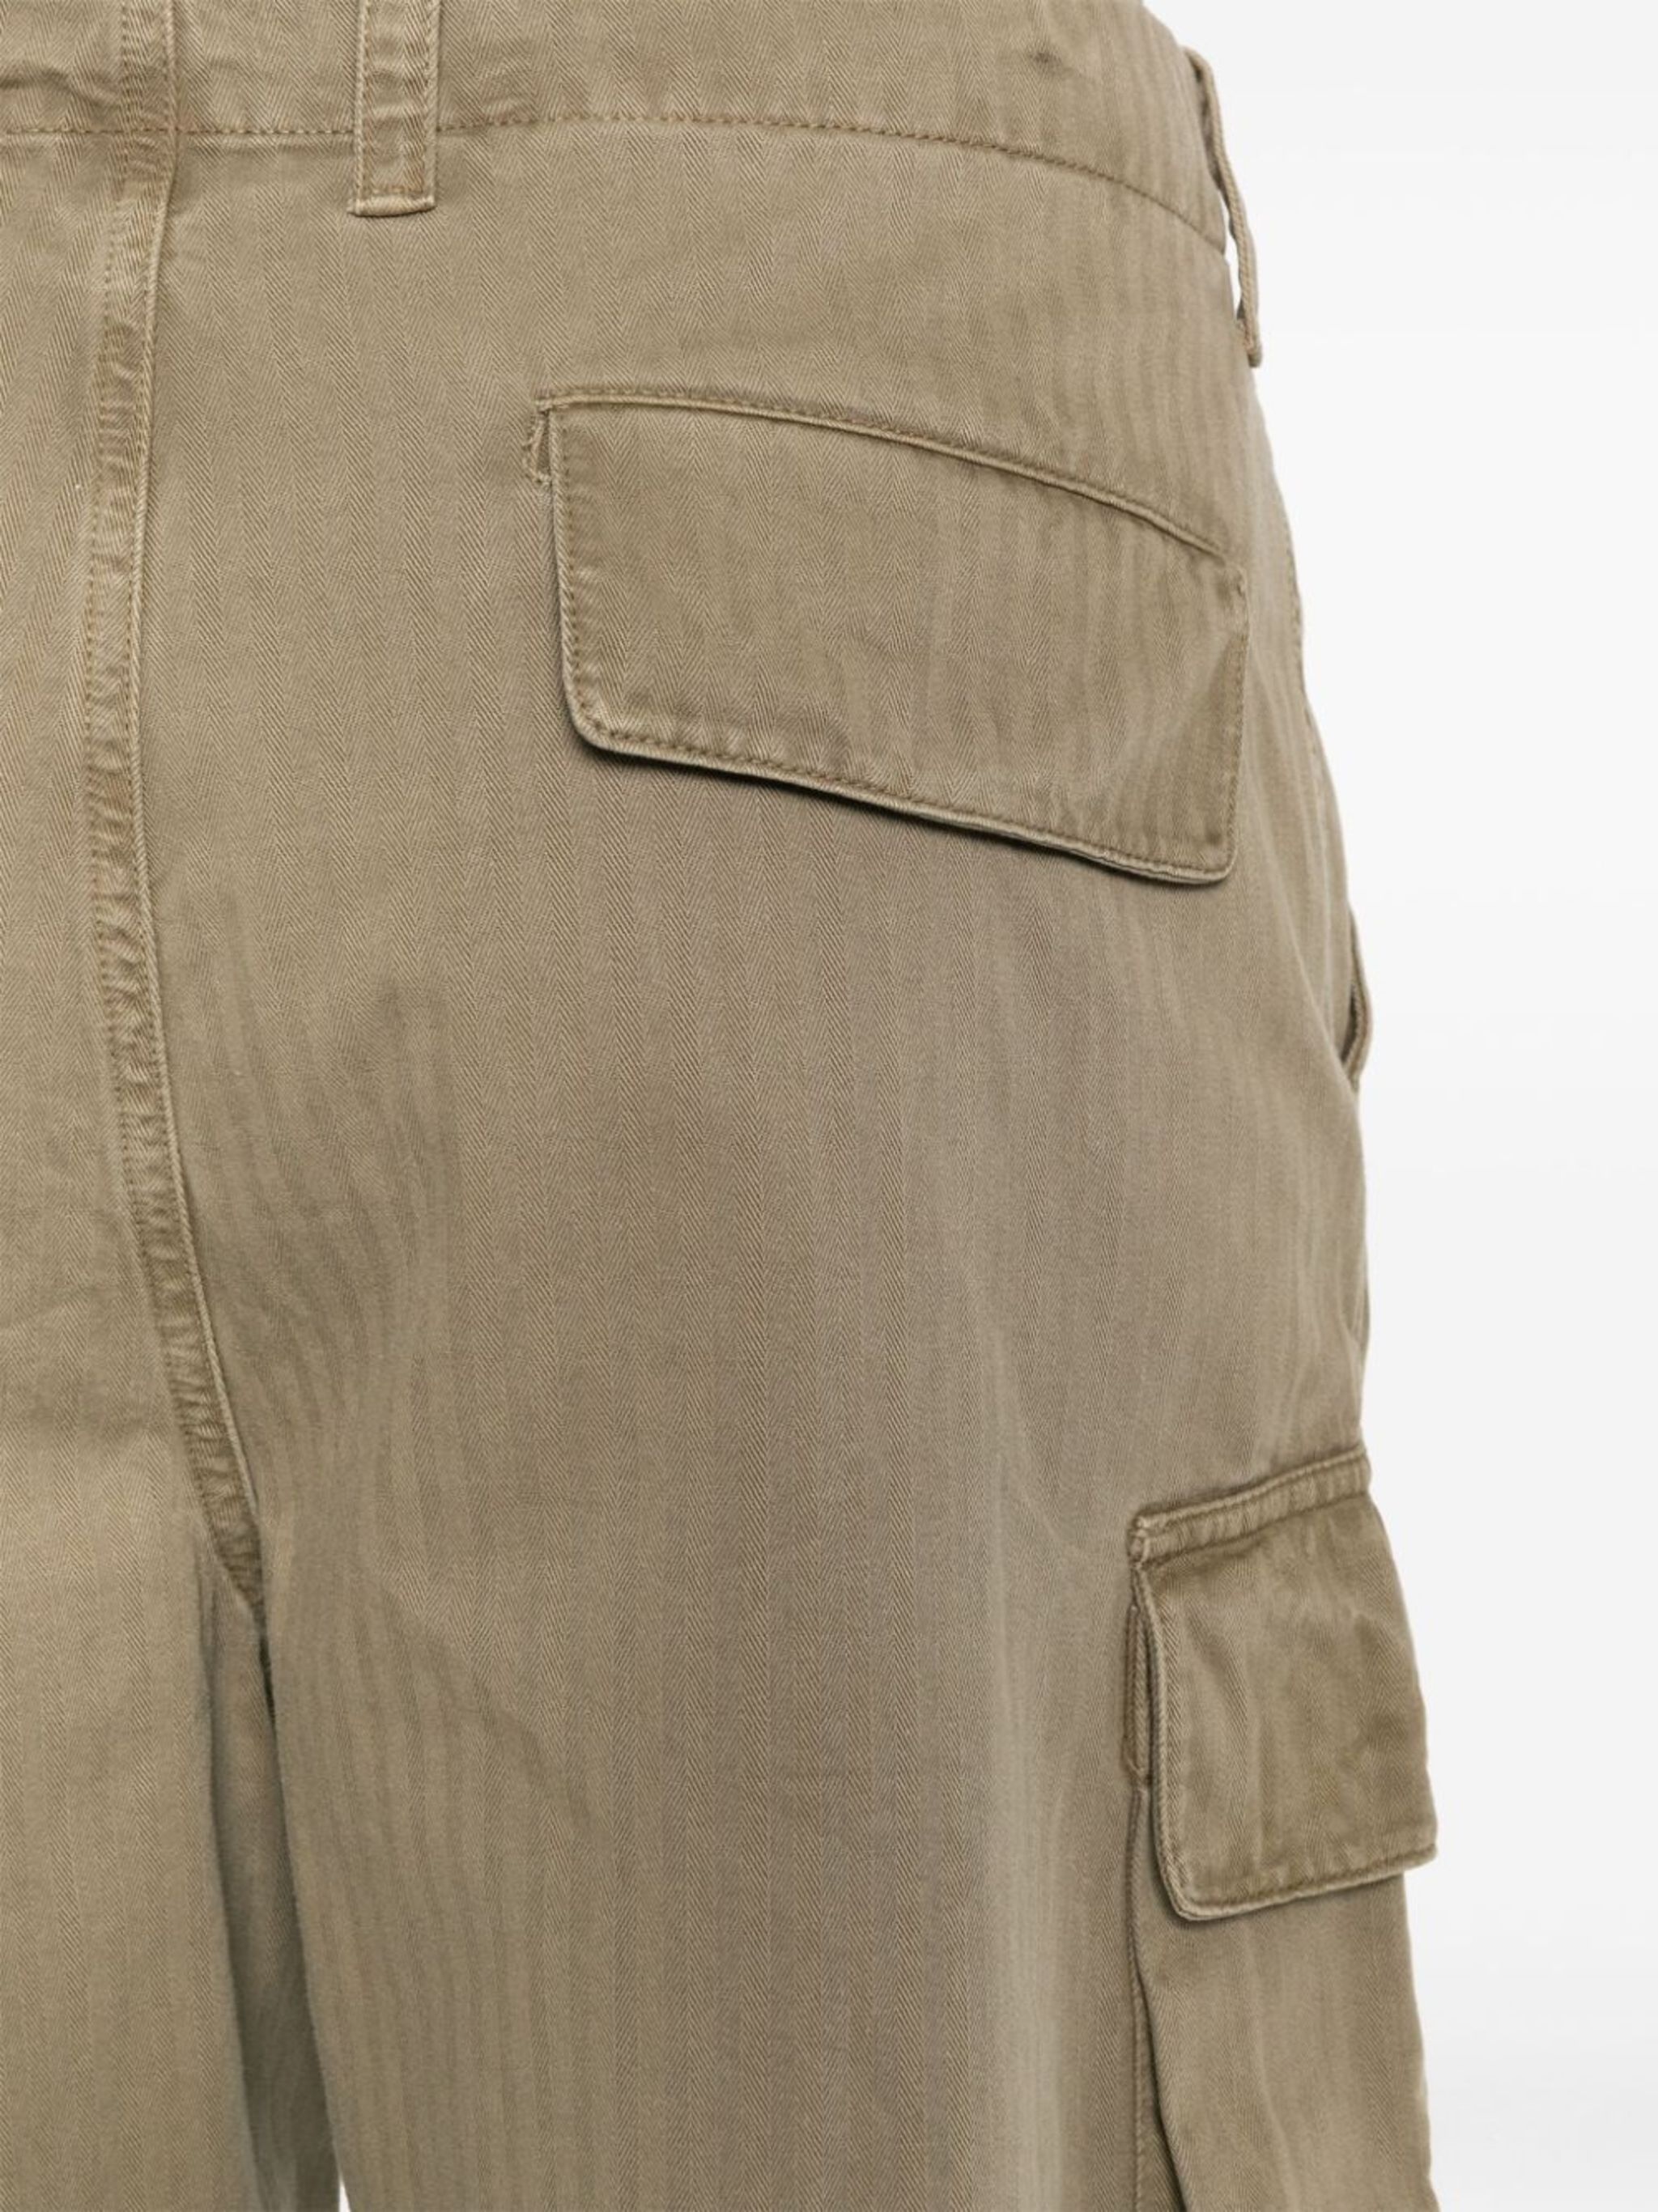 Mount cotton cargo shorts - 5